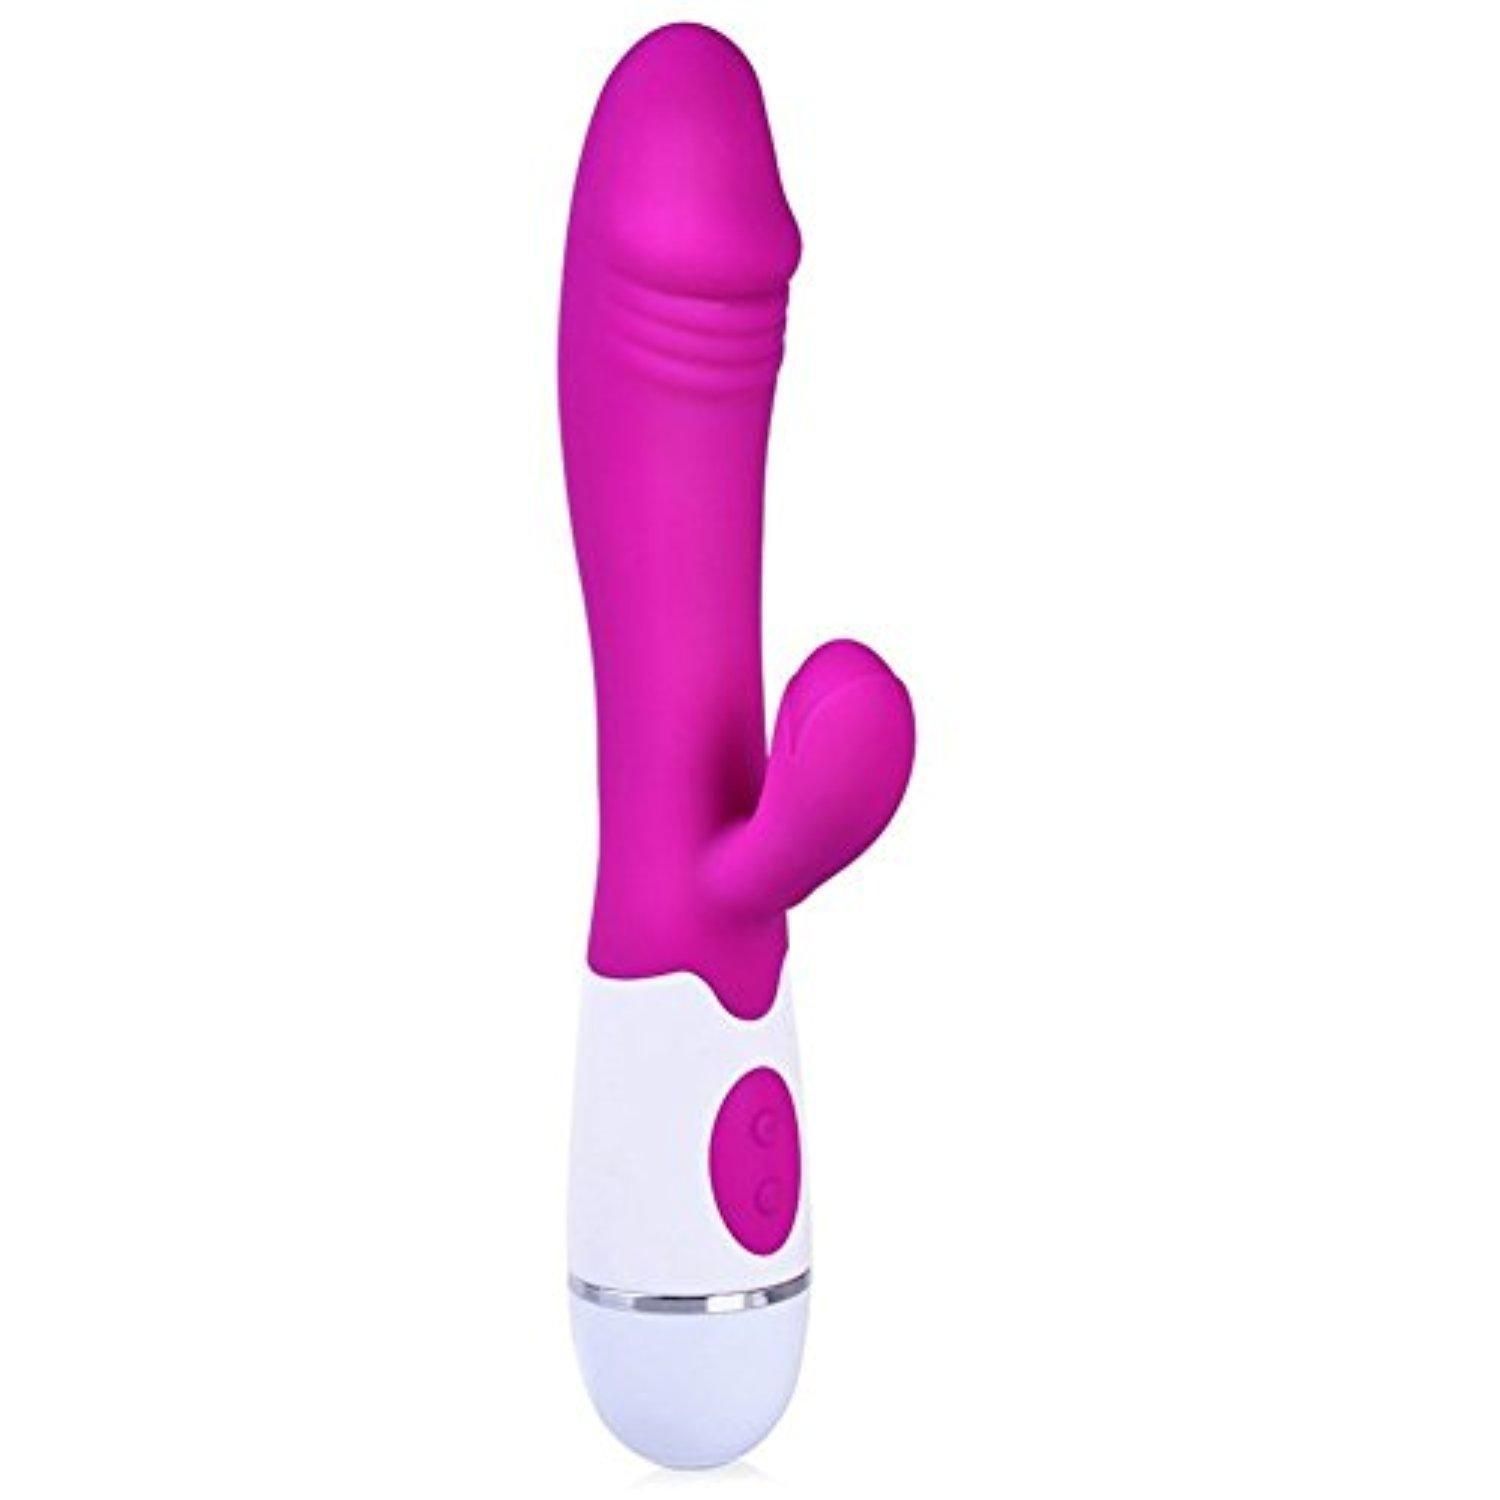 Erotic butt plug